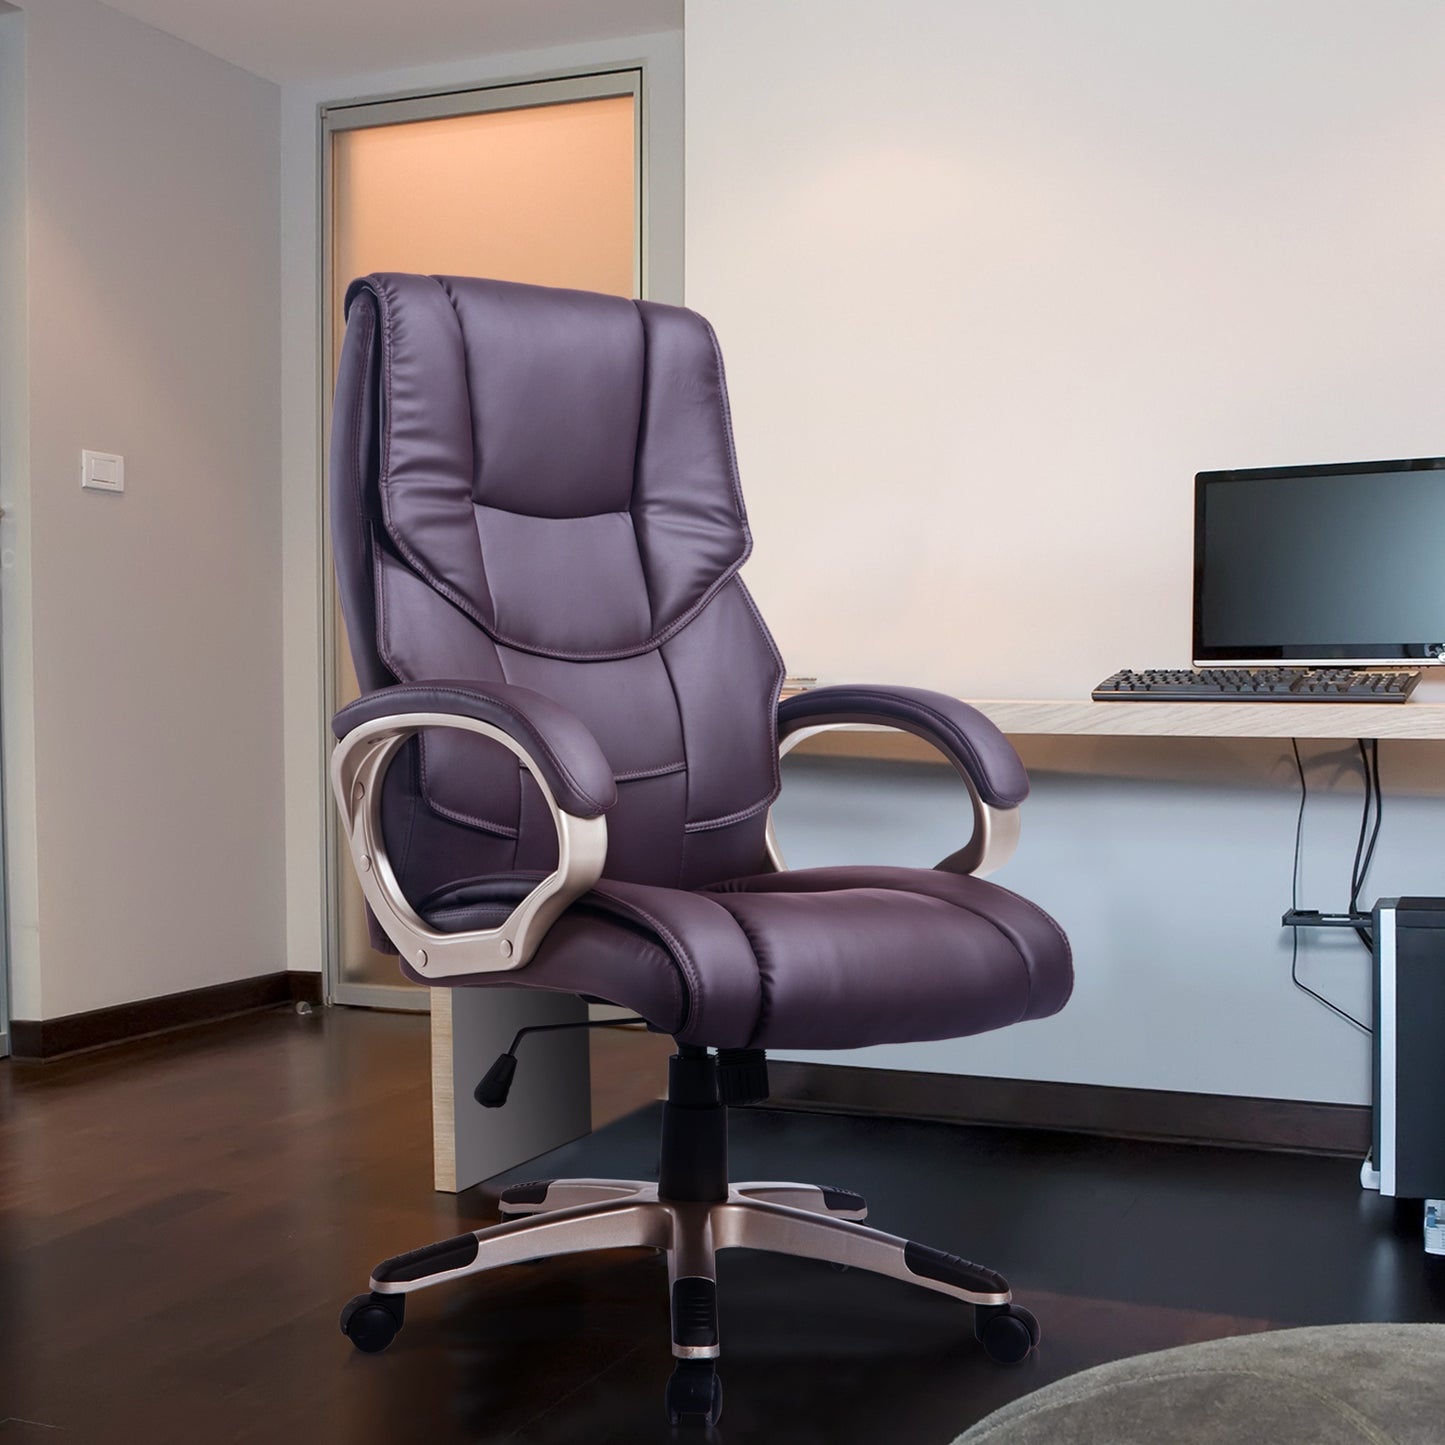 HOMCOM PU Leather Ergonomic Executive Office Desk Chair Brown